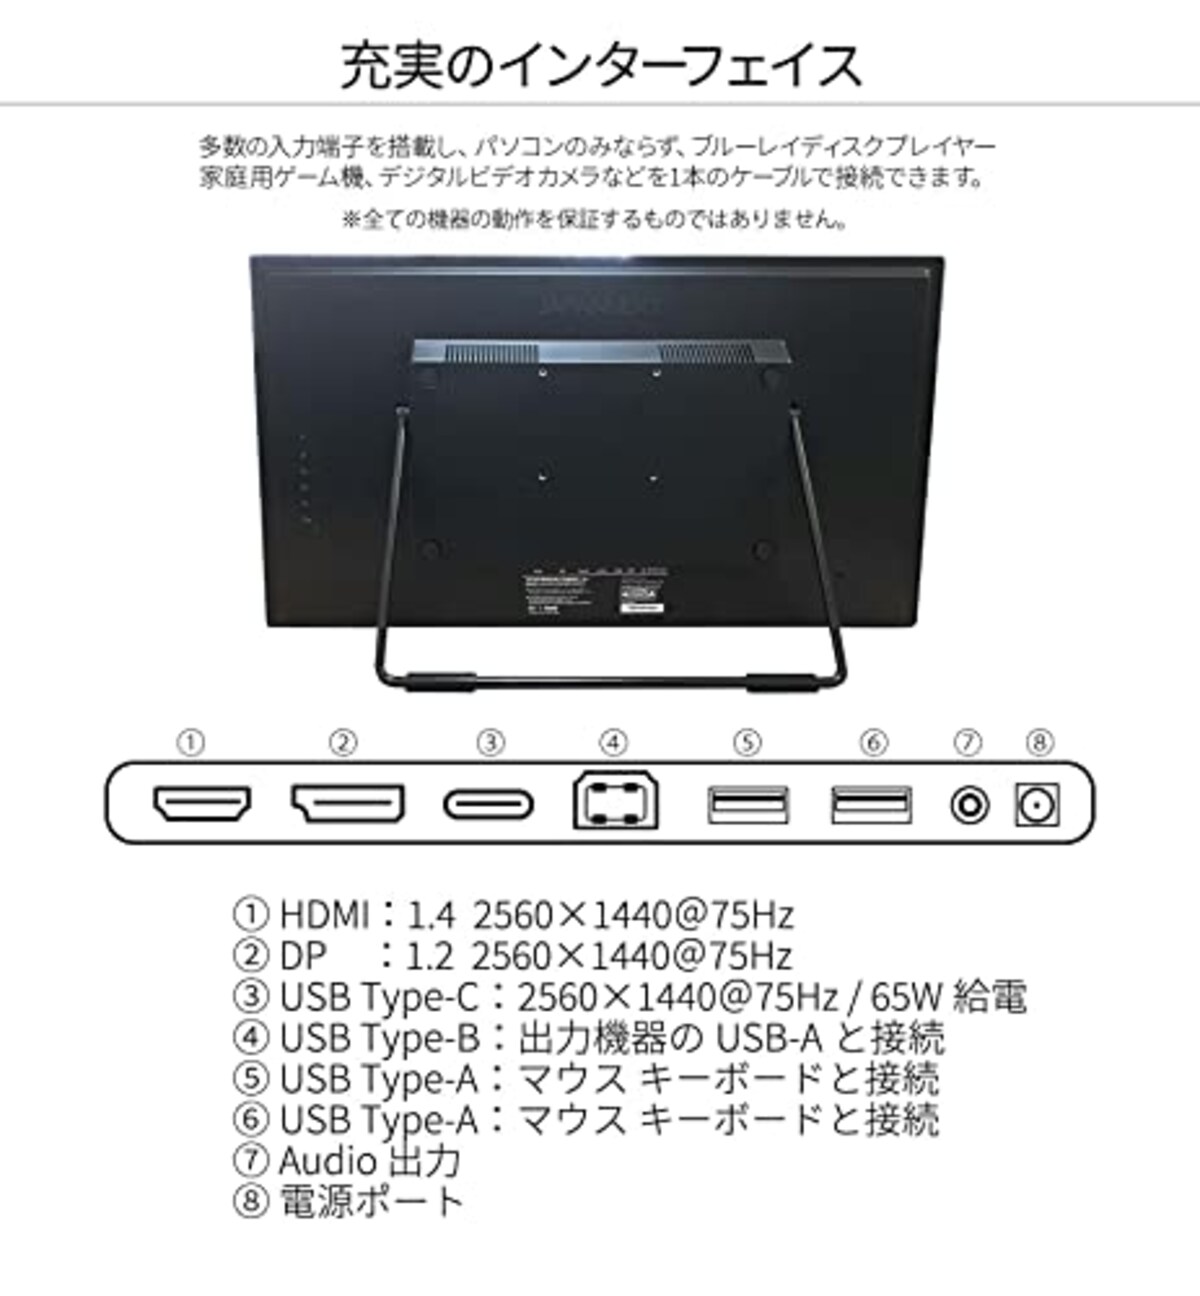  JAPANNEXT 27インチ IPS 10点タッチ対応 WQHD解像度USB-C給電対応 液晶モニターJN-IPS27WQHDR-C65W-T HDMI DP USB-C(65W給電) KVM機能 10点マルチタッチ対応画像7 